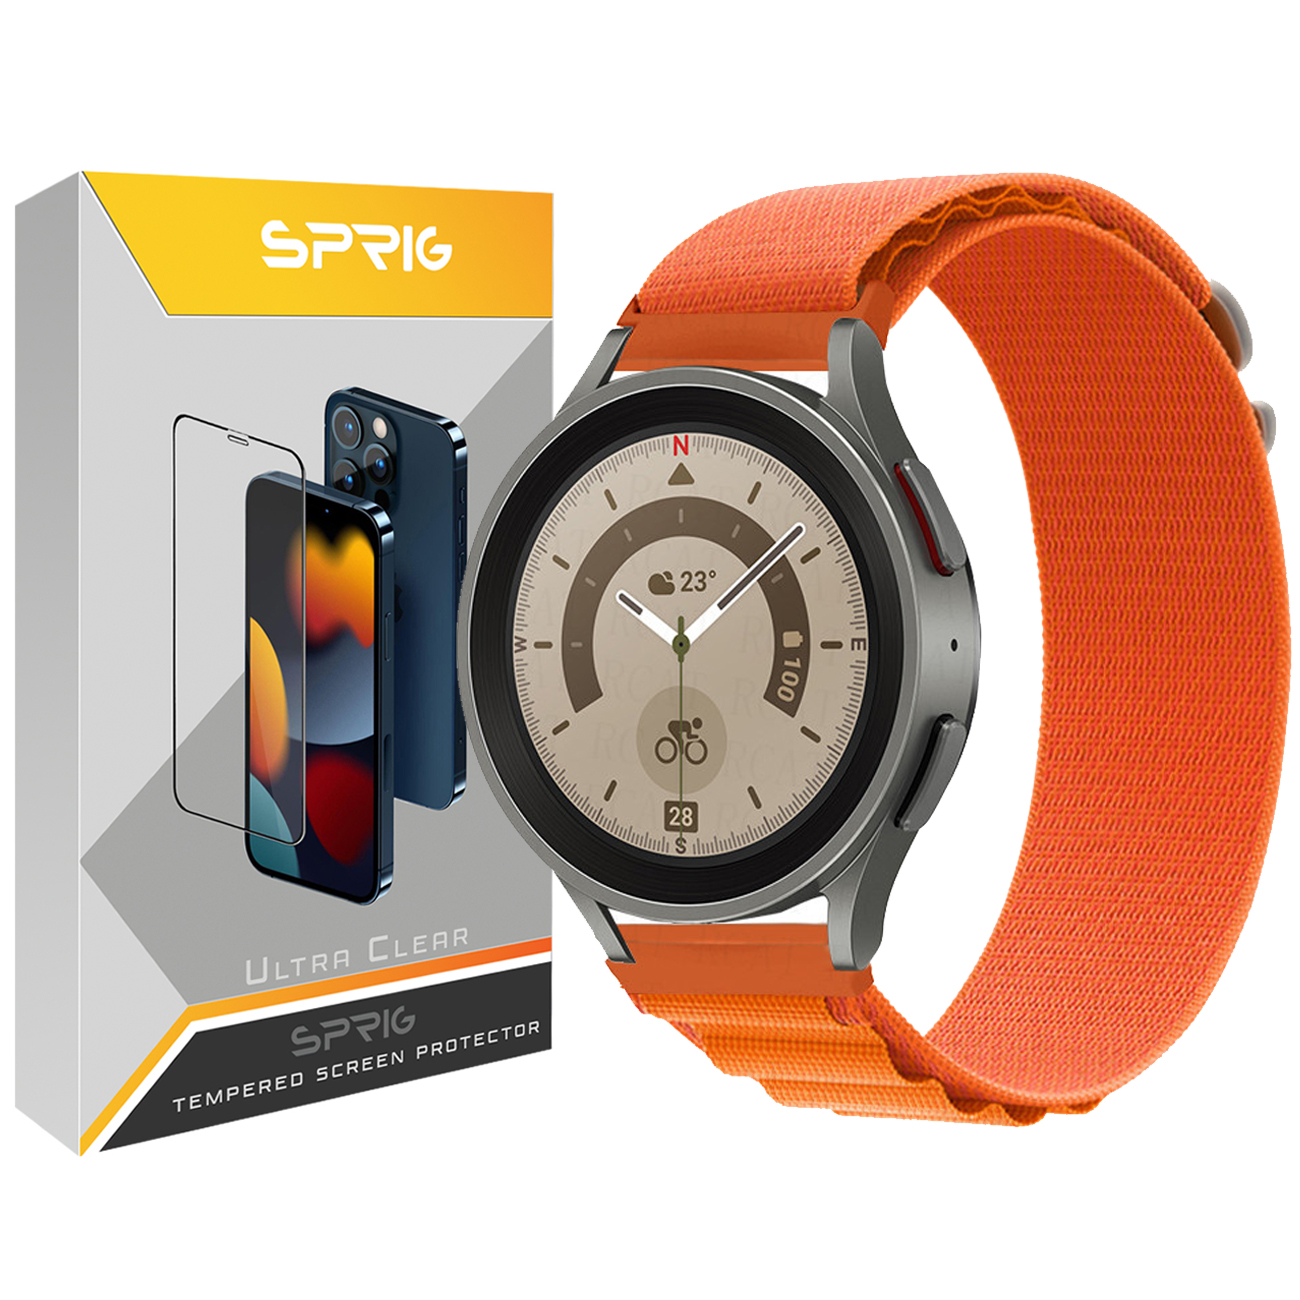 بند اسپریگ مدل Loop Alpine مناسب برای ساعت هوشمند سامسونگ Galaxy Watch Active 1 / Active 2 40mm / Active 2 44mm / Watch 3 size 41mm / Galaxy Watch 4 40mm / watch 4 42mm / watch 4 44mm / watch 4 46mm